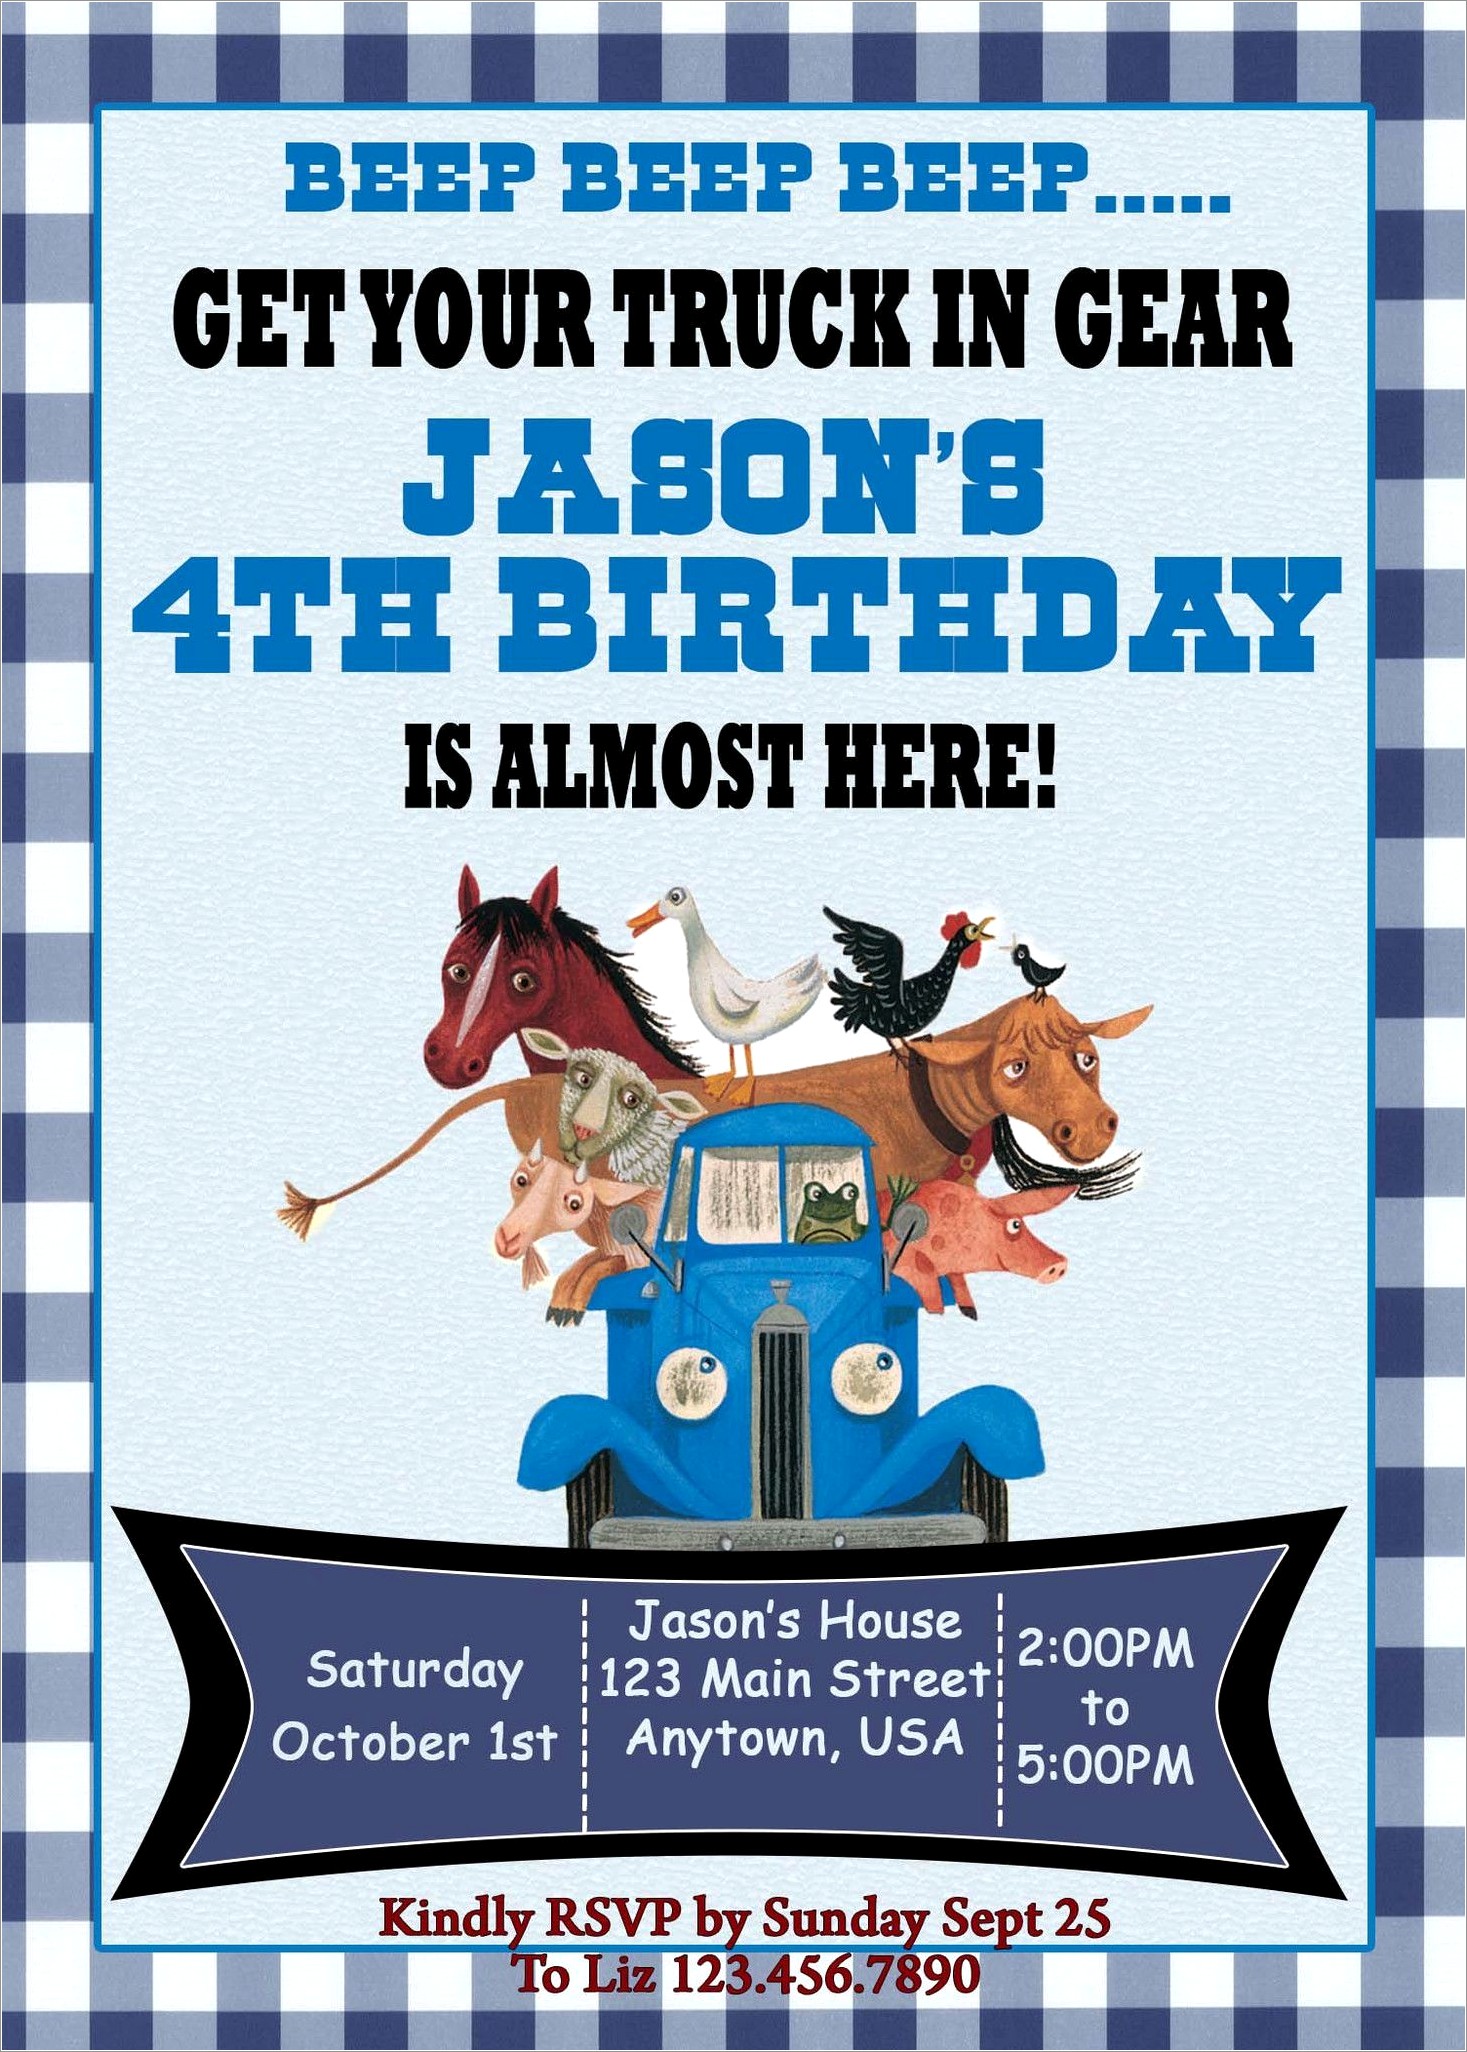 Little Blue Truck Birthday Invitations Free